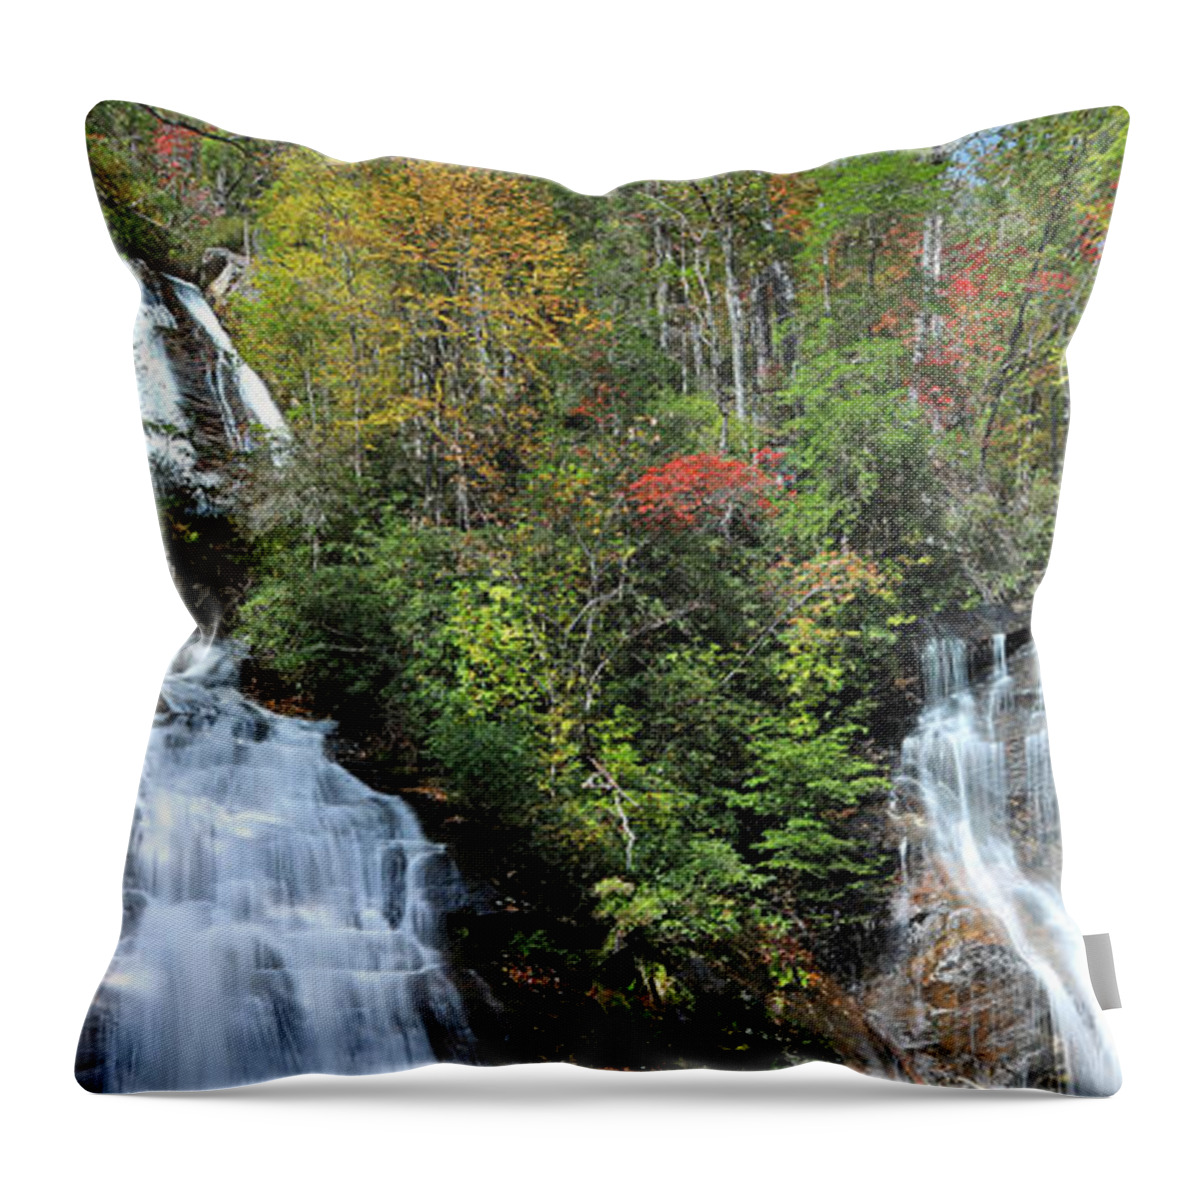 Waterfall Throw Pillow featuring the photograph Waterfall - Anna Ruby Falls, Georgia by Richard Krebs